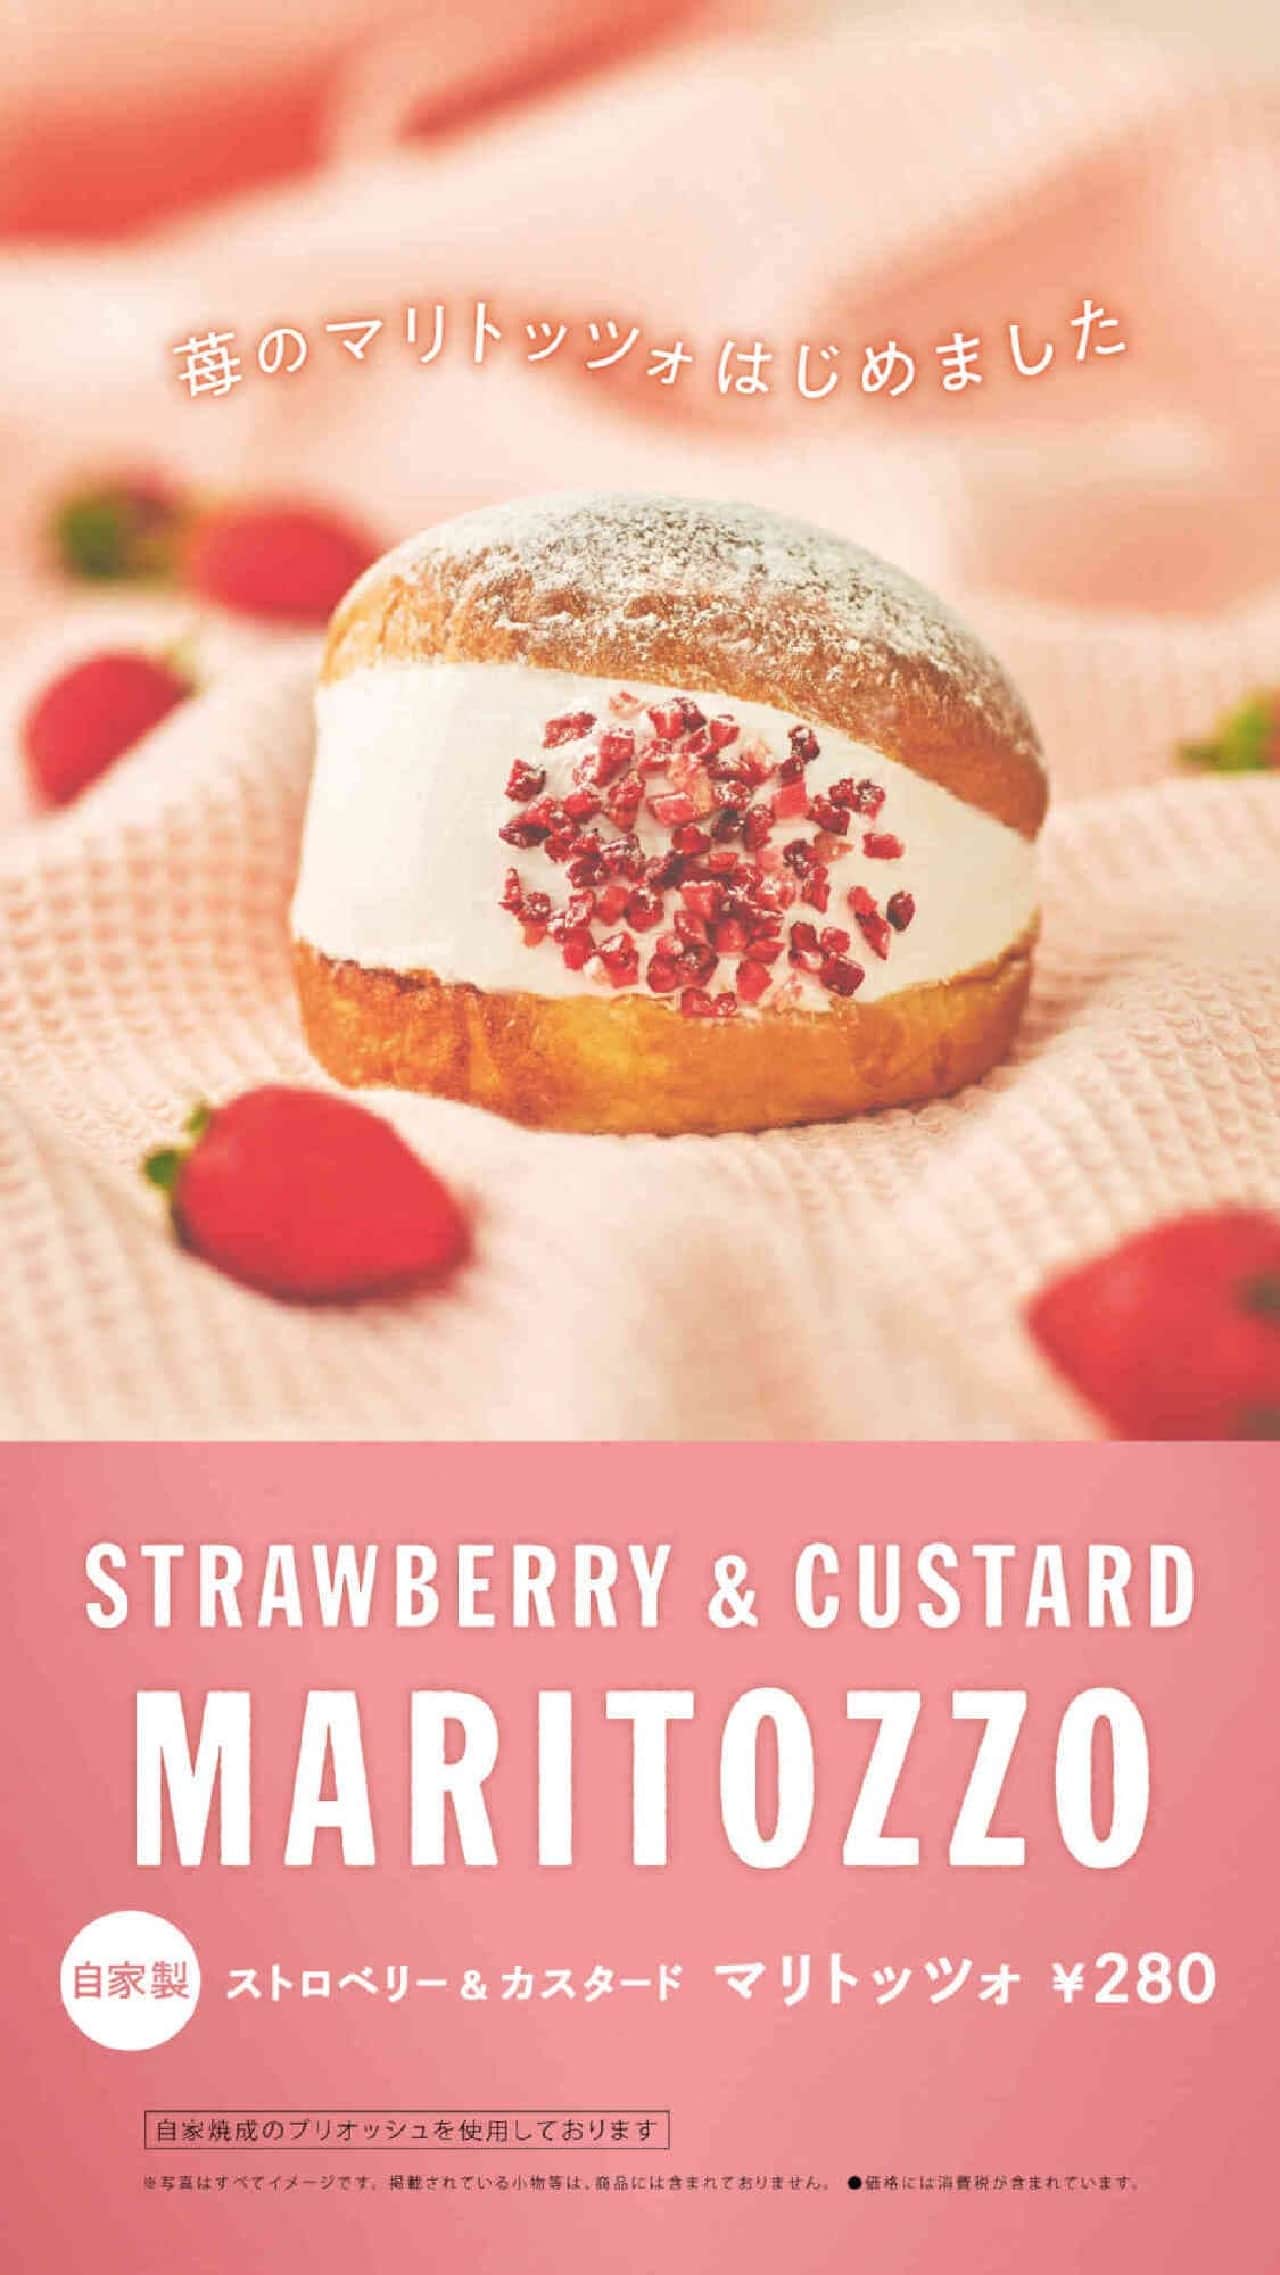 Beckers "Strawberry & Custard Maritozzo"